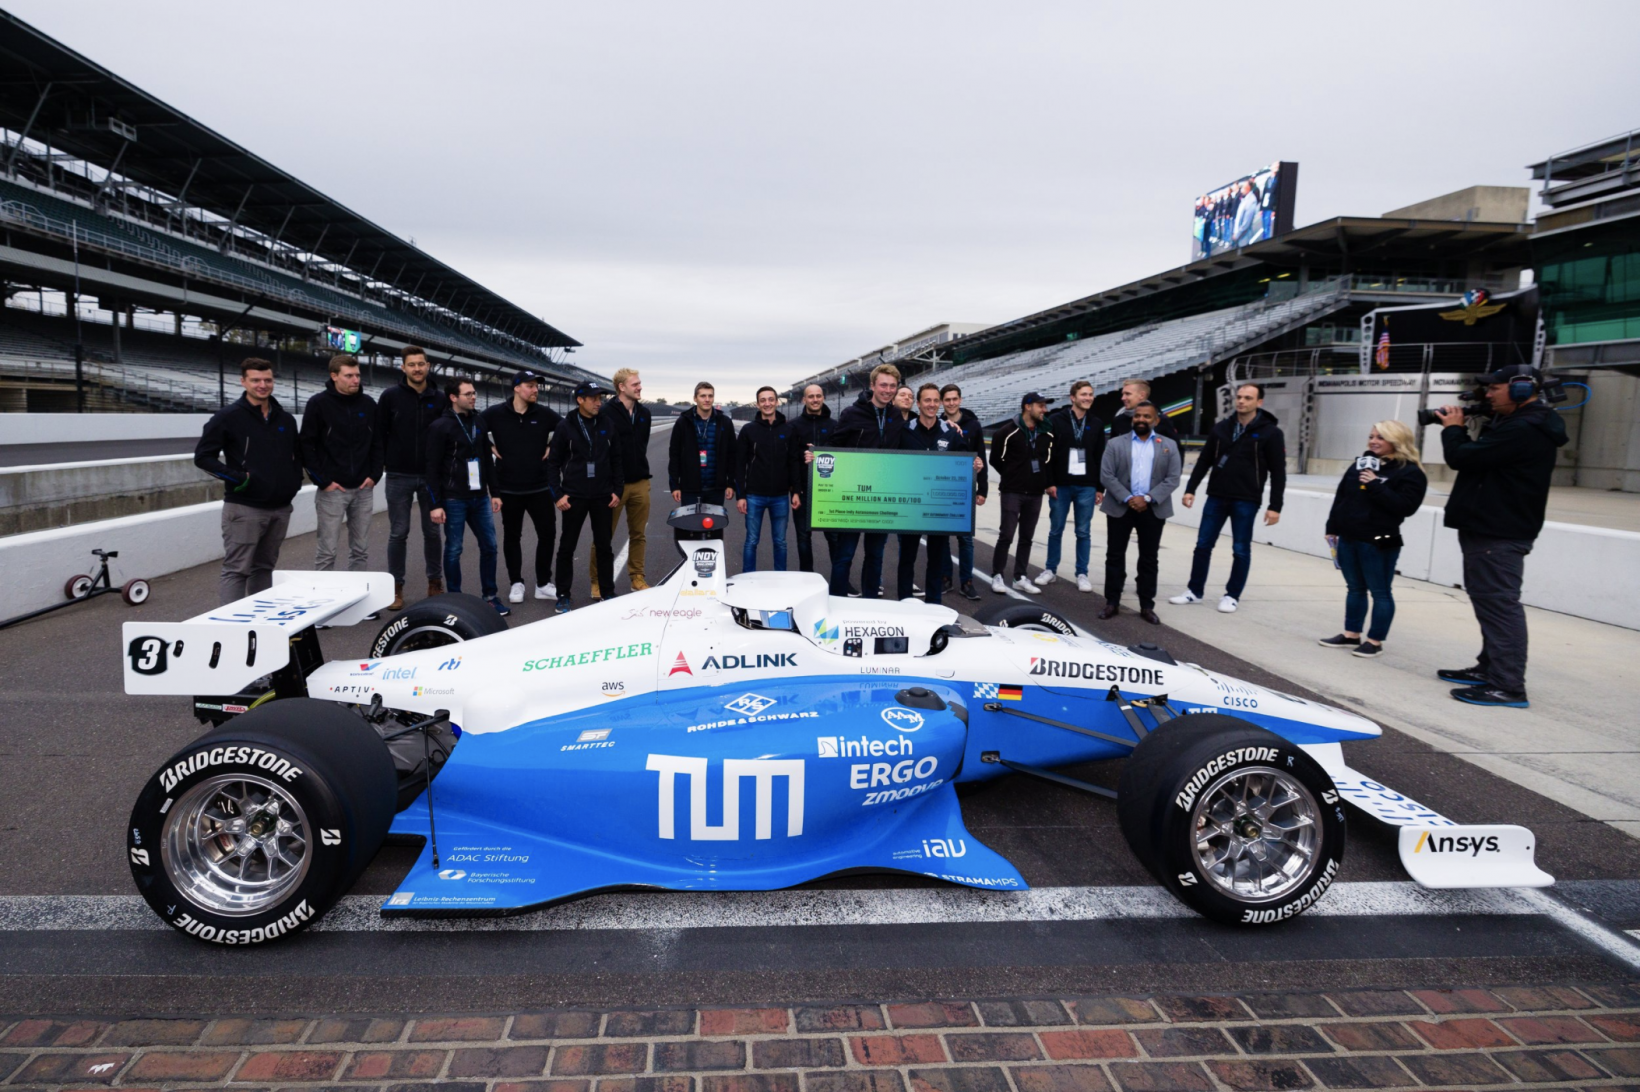 TUM Autonomous Motorsport from the Technische Universität München (TUM) won the $1 million grand prize